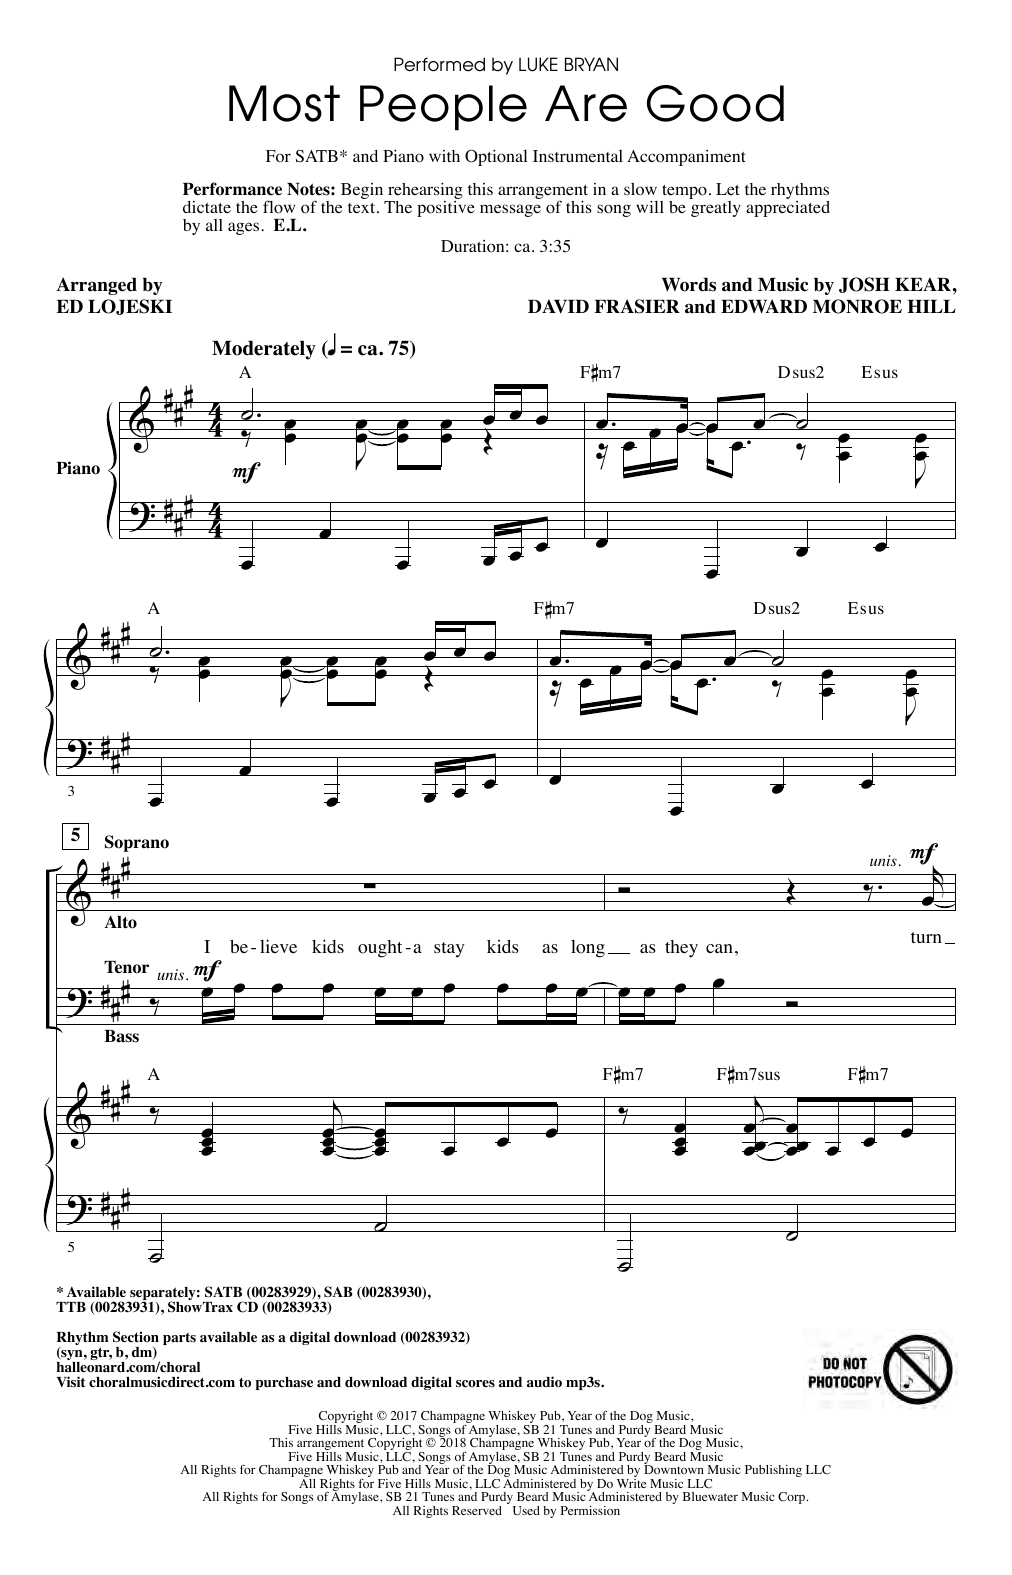 Luke Bryan Most People Are Good (arr. Ed Lojeski) Sheet Music Notes & Chords for TTBB Choir - Download or Print PDF